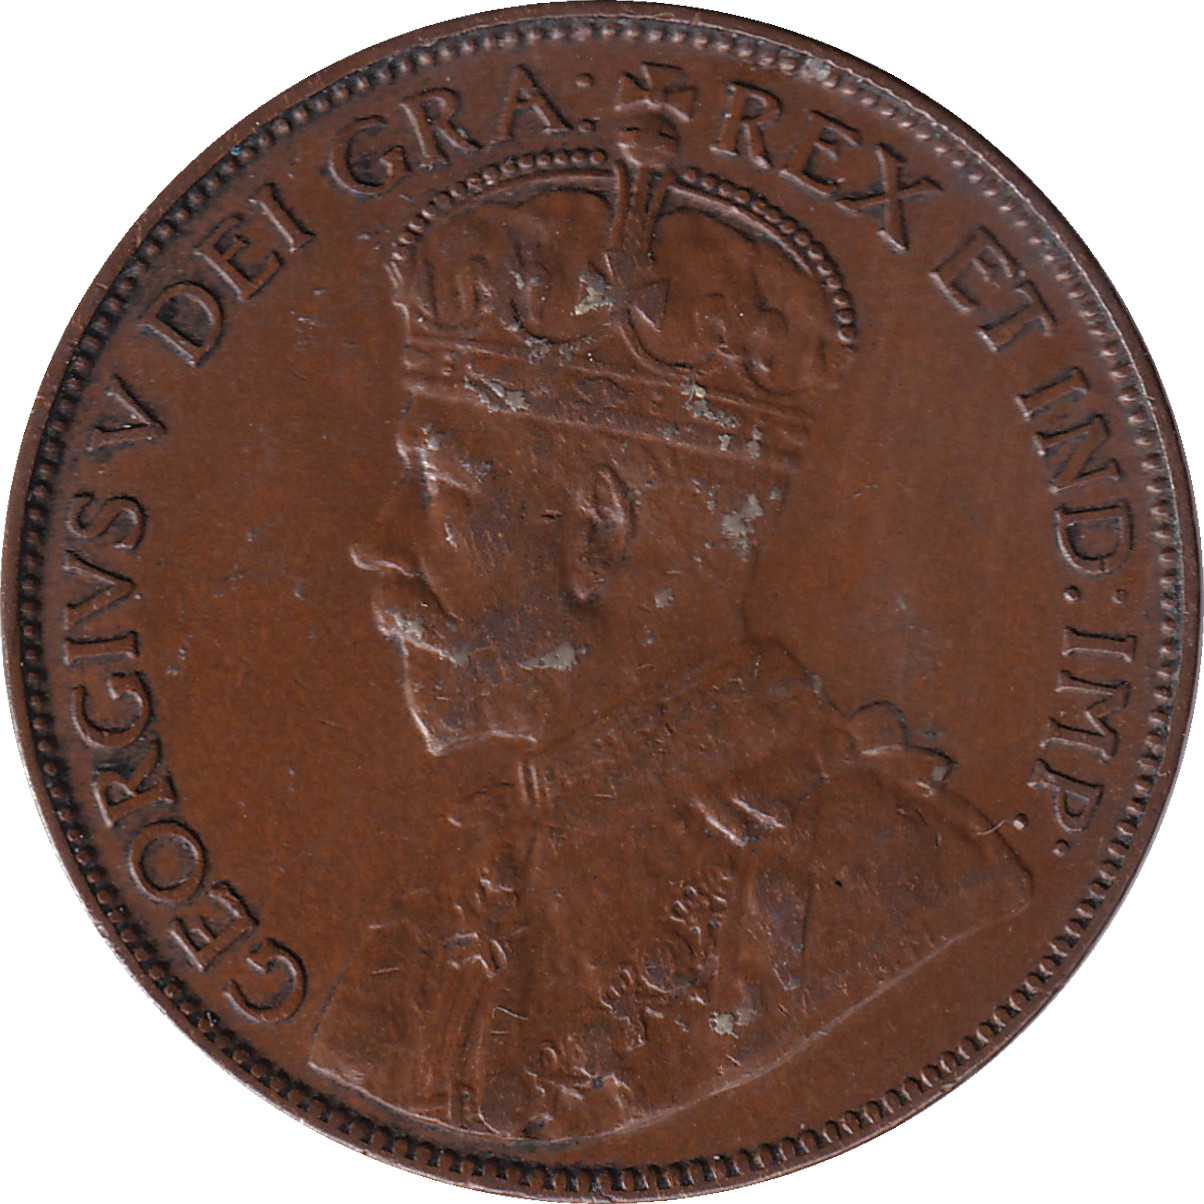 1 cent - George V